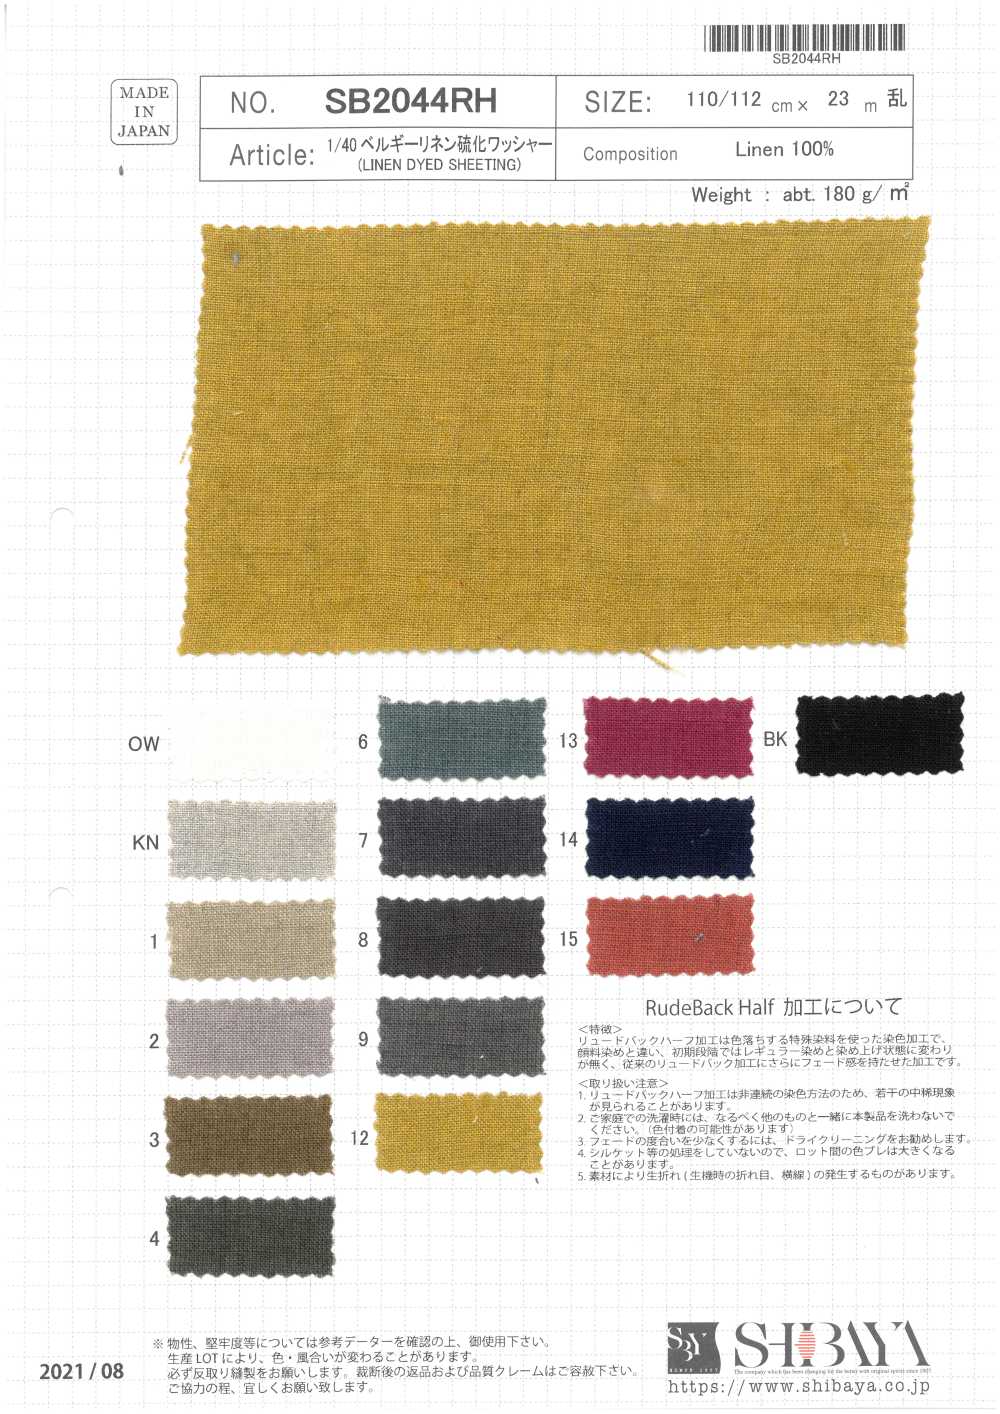 SB2044RH 1/40 Belgian Linen Sulfurized Washer Processing[Textile / Fabric] SHIBAYA